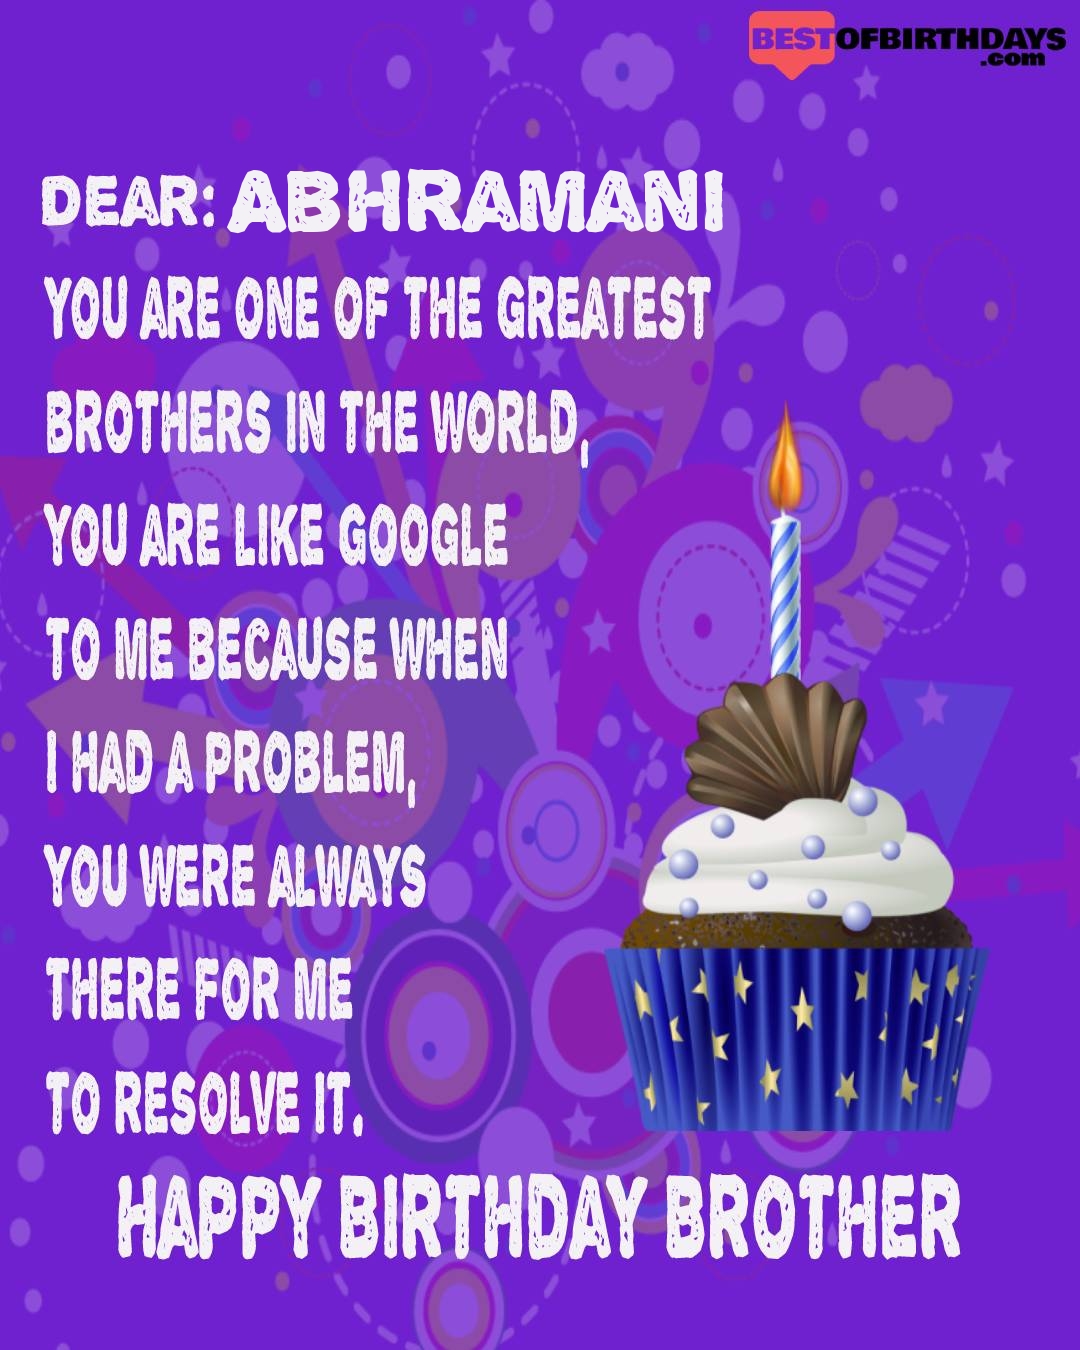 Happy birthday abhramani bhai brother bro